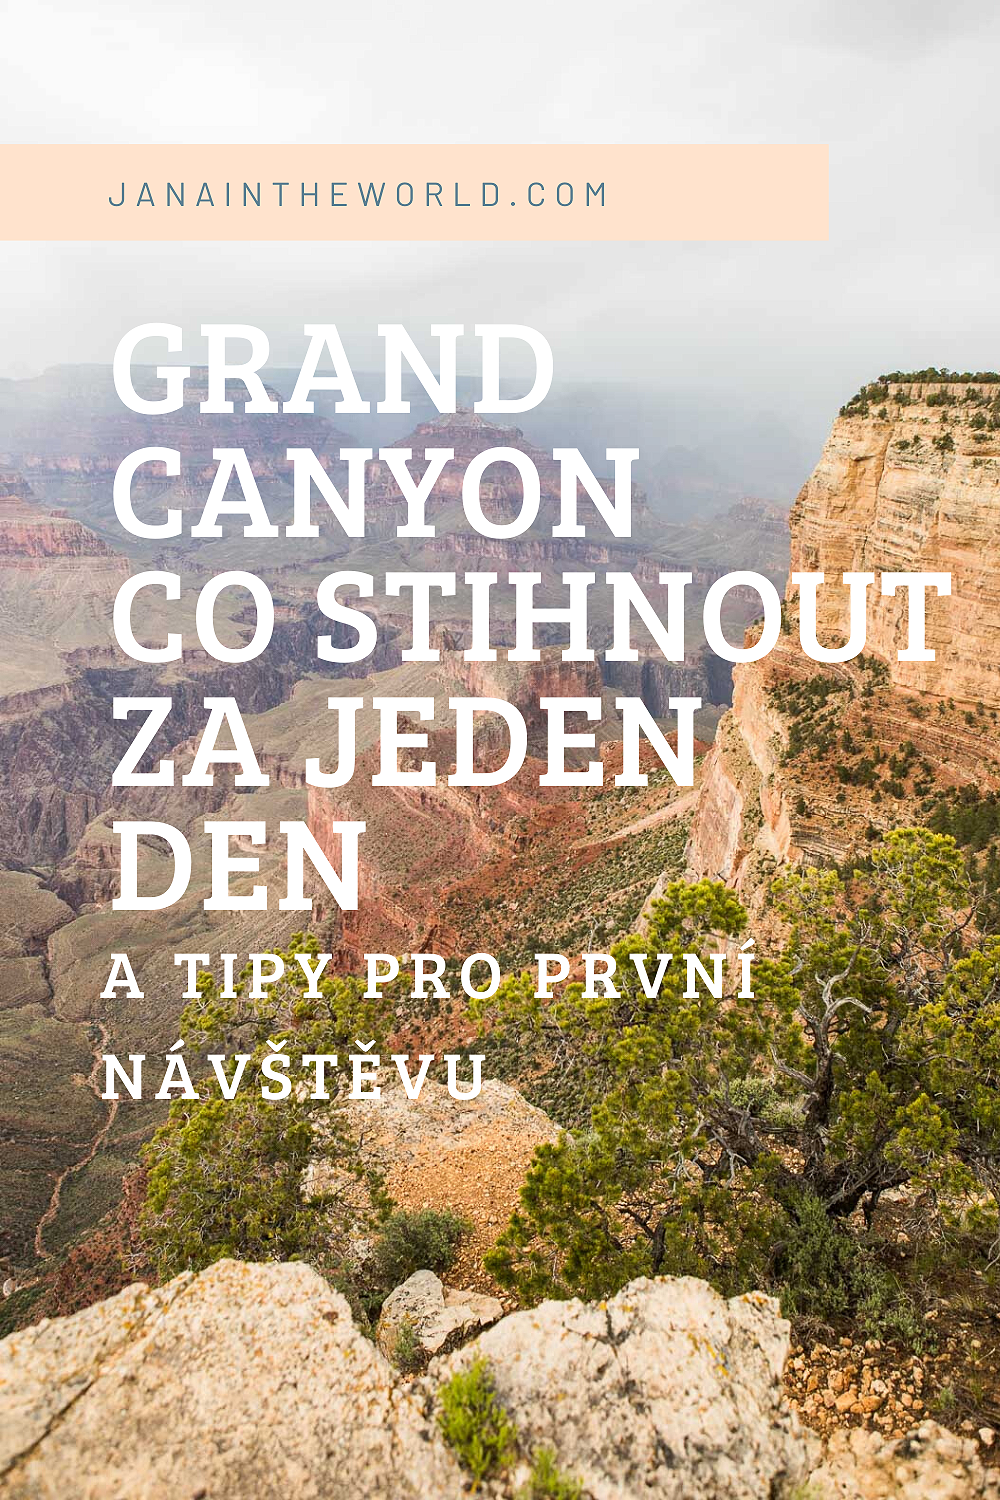 Grand Canyon tipy a info pro prvni navstevu